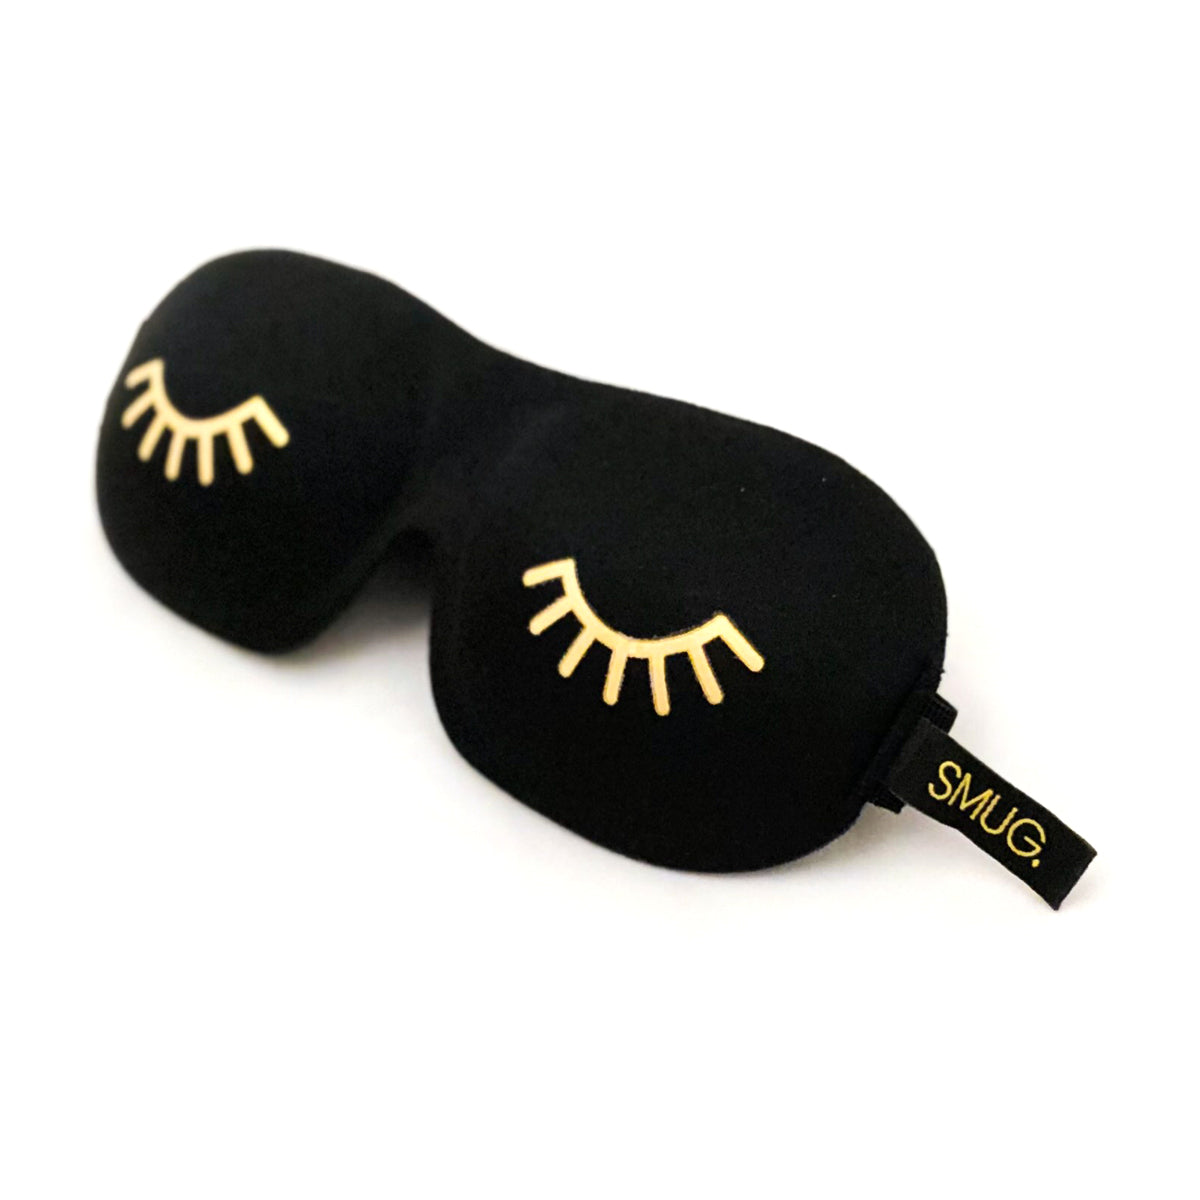 Contoured 3D Blackout Sleep Mask - Wink Print, Black